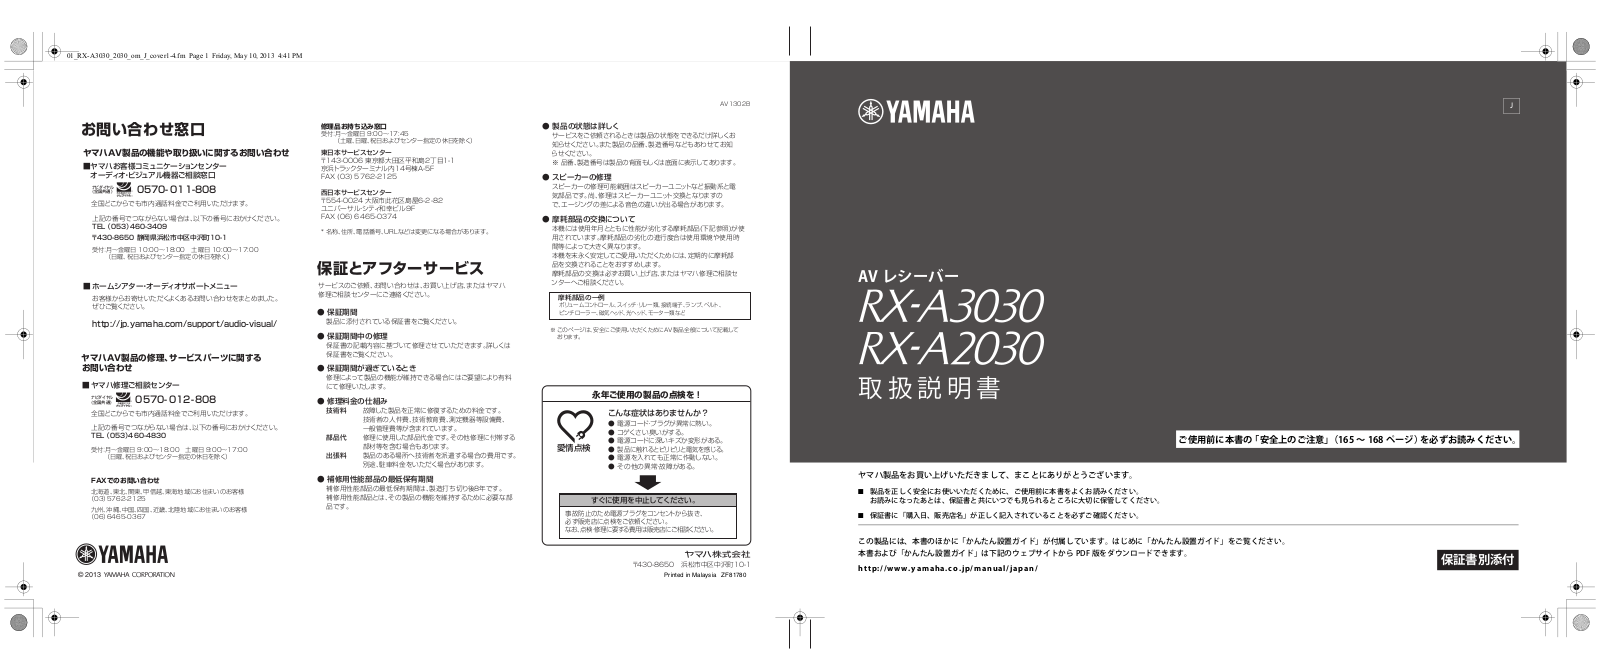 Yamaha RX-A3030, RX-A2030 User Manual